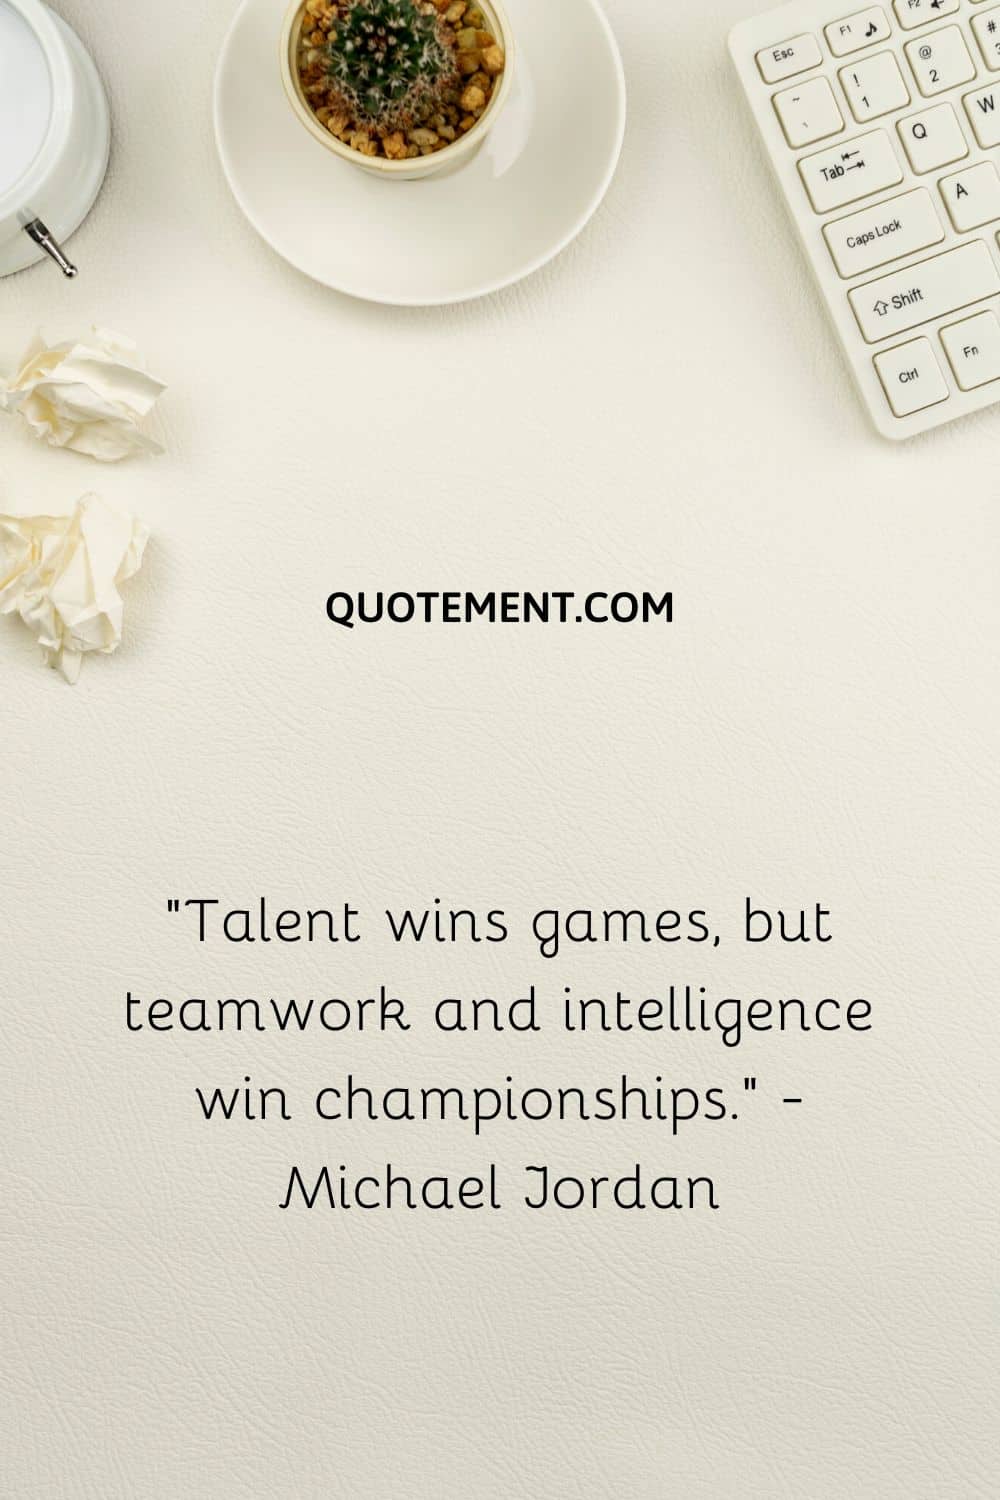 “Talent wins games, but teamwork and intelligence win championships.” - Michael Jordan